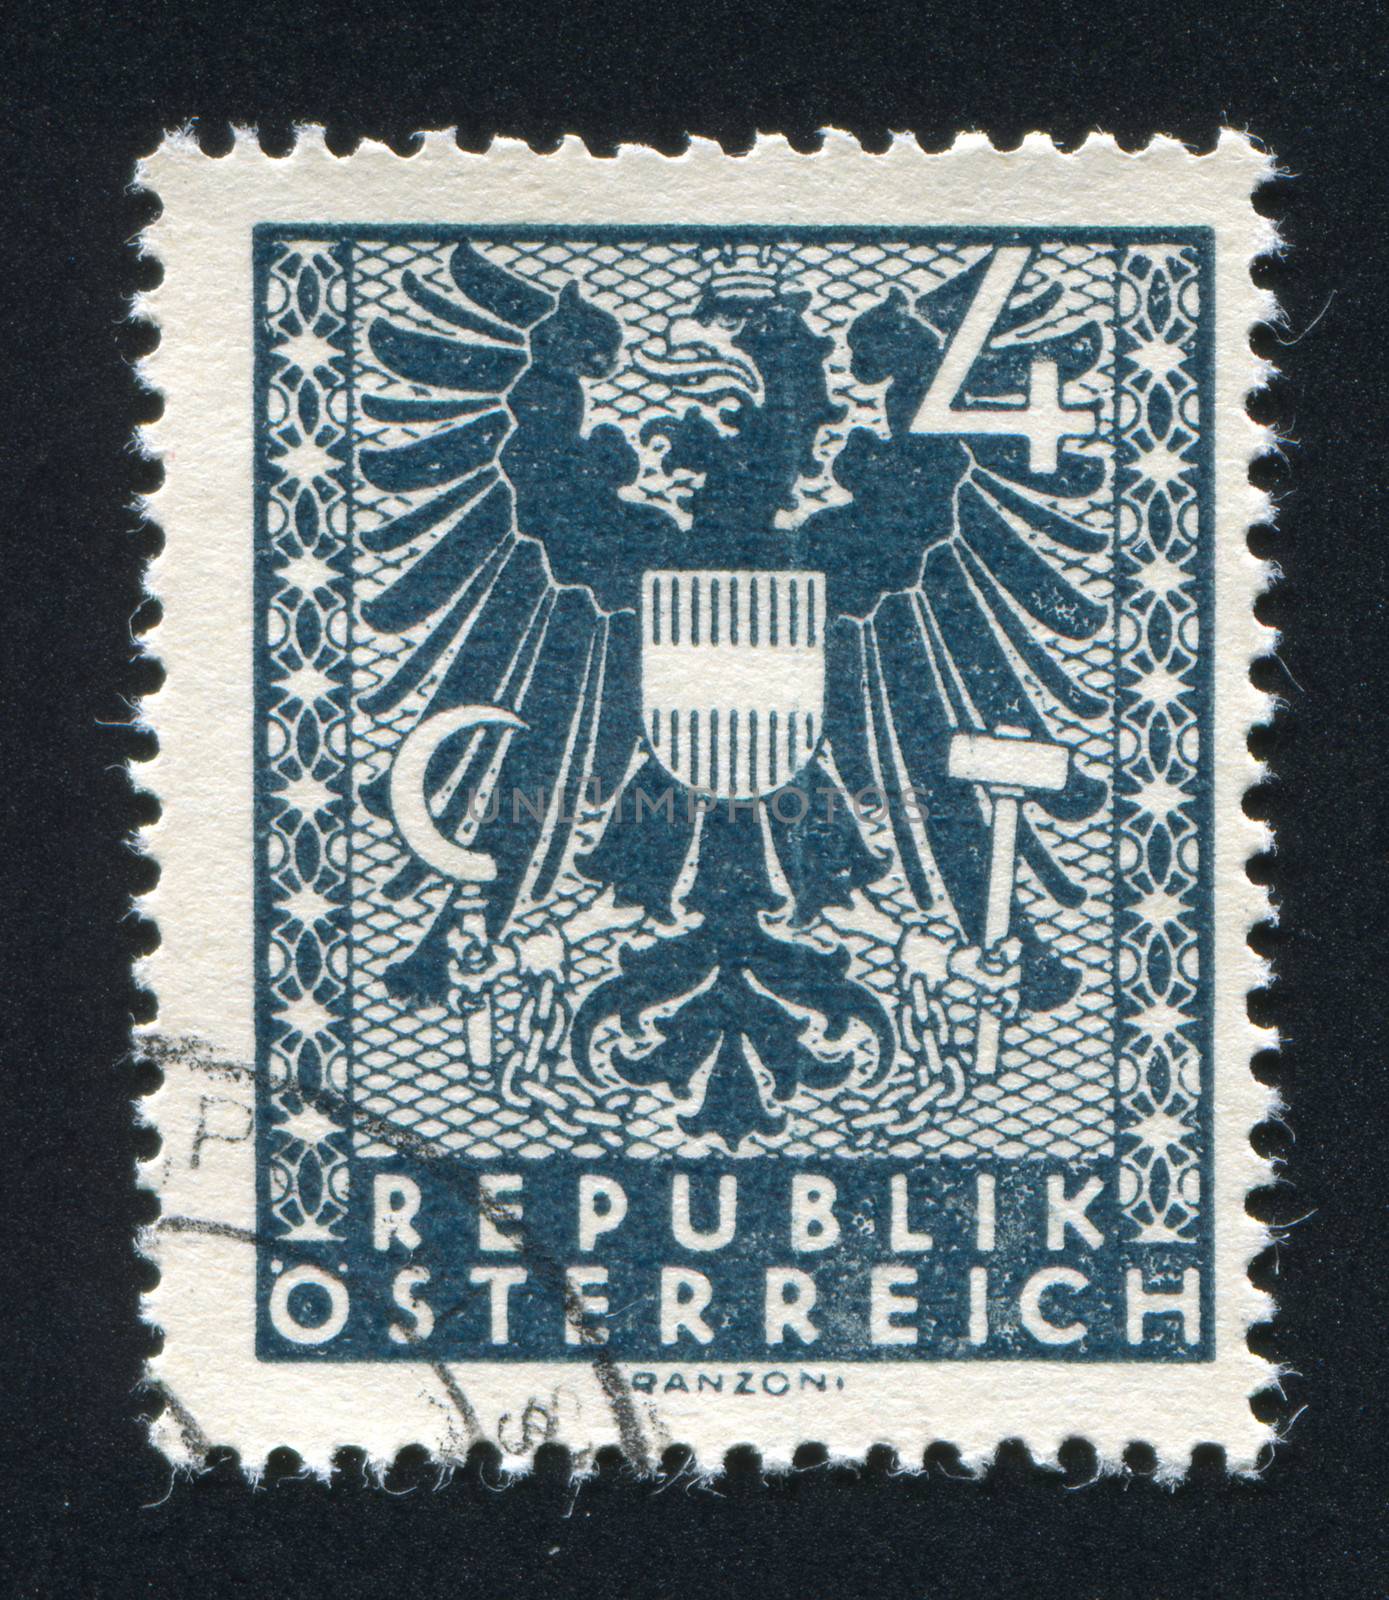 AUSTRIA - CIRCA 1945: stamp printed by Austria, shows ornament and eagle, circa 1945